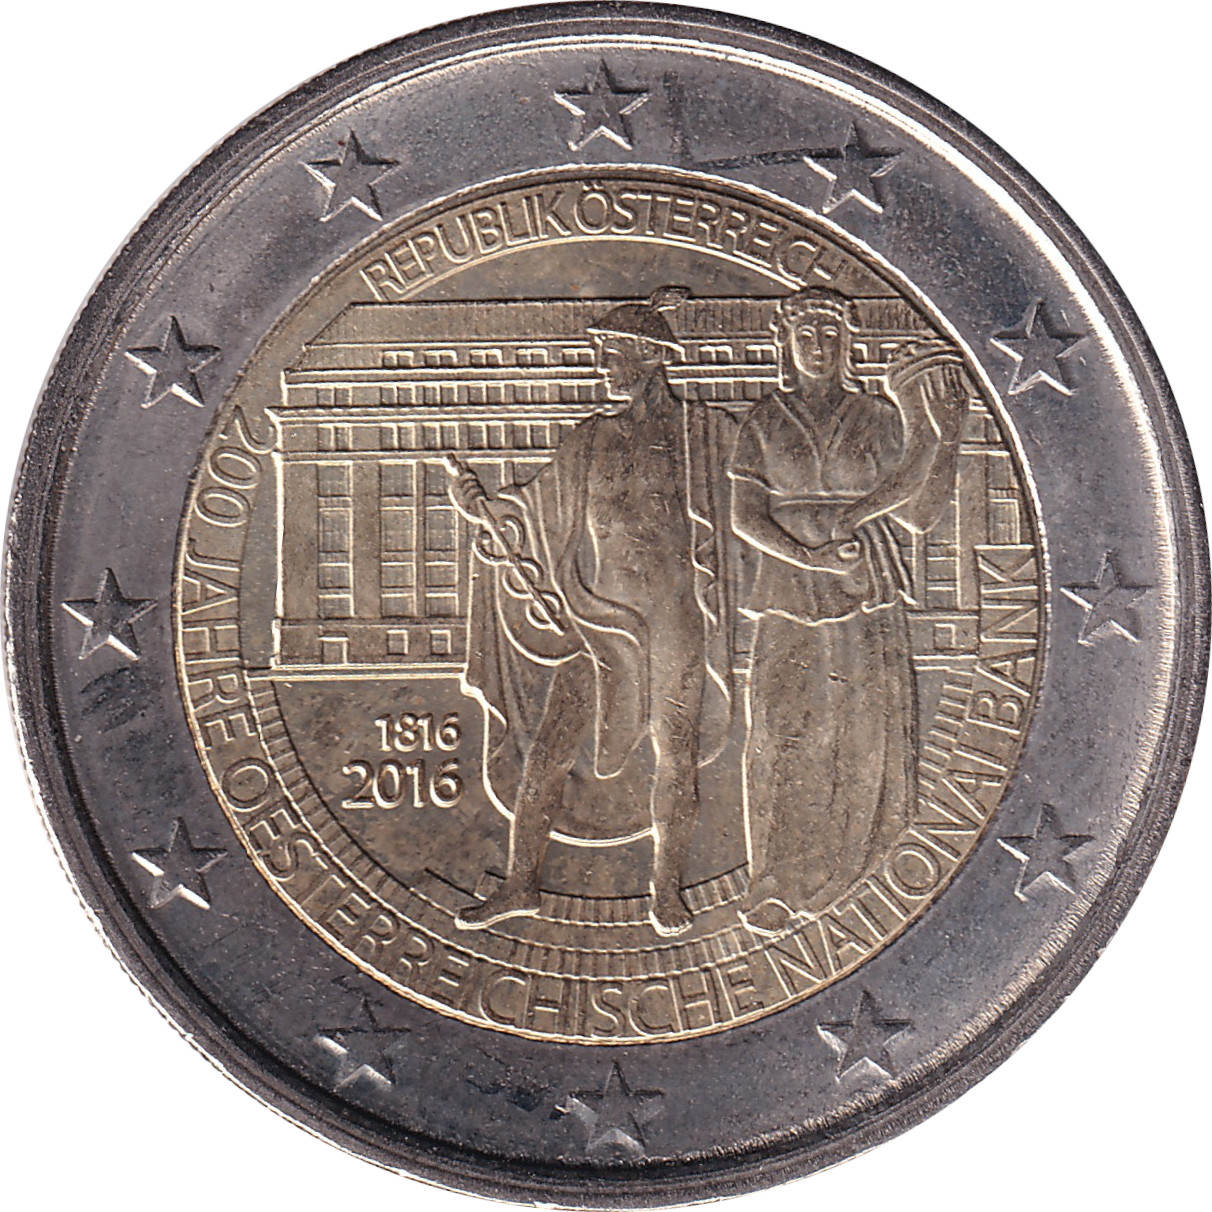 2 euro - Bank of Austria - 200 years